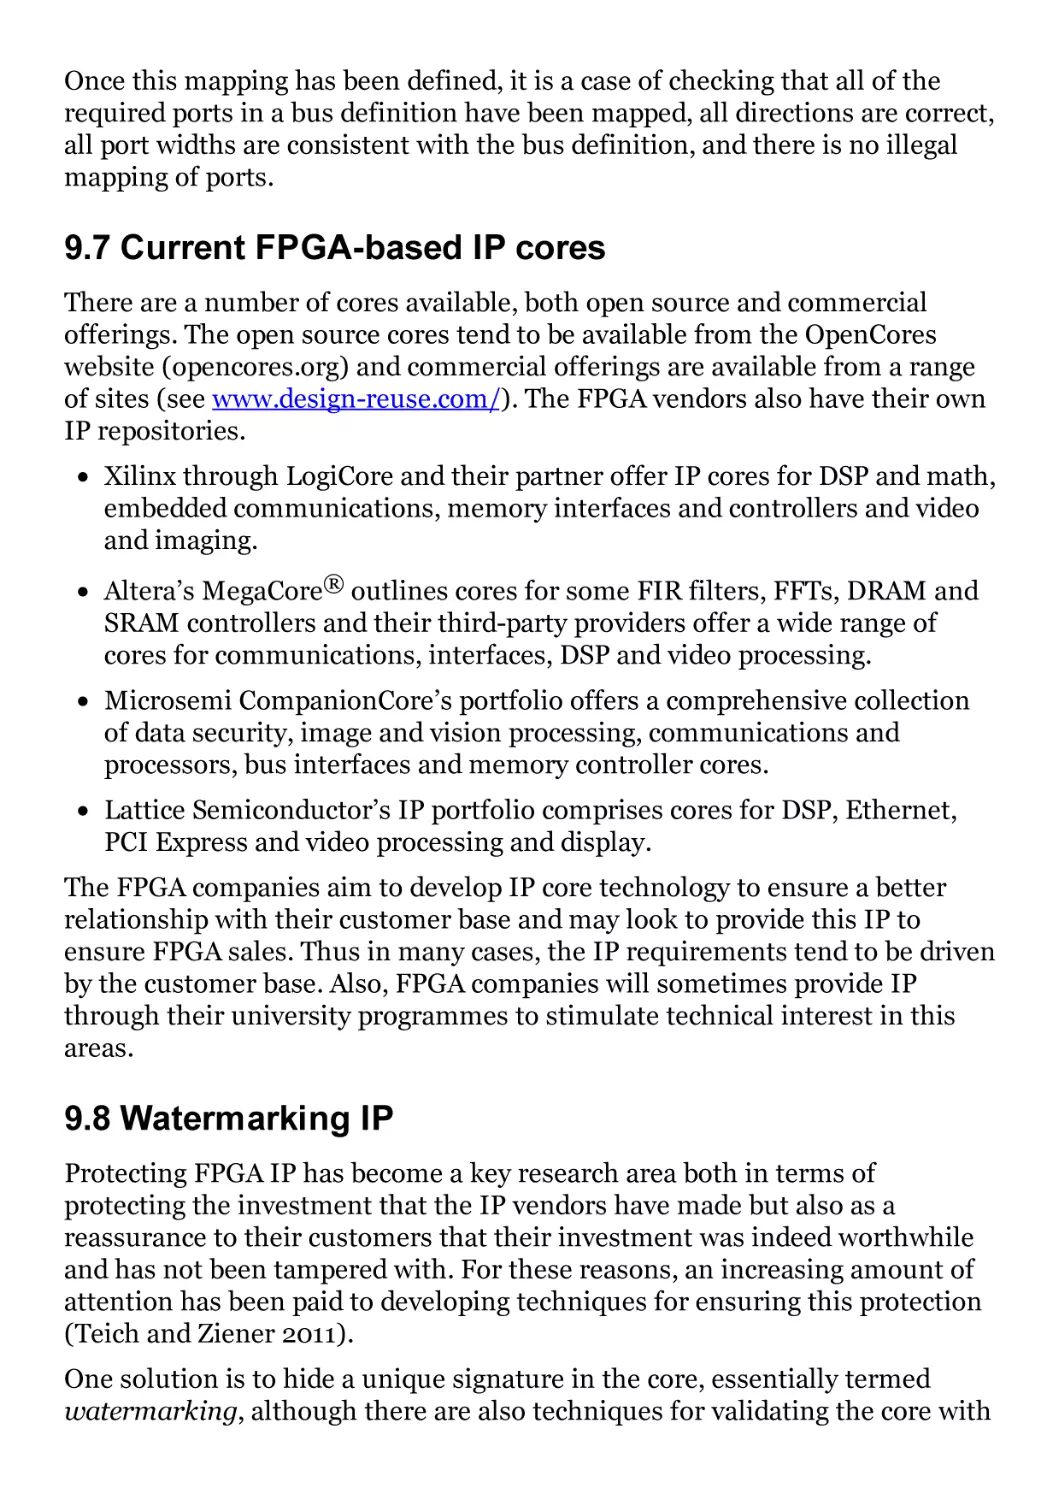 9.7 Current FPGA-based IP cores
9.8 Watermarking IP